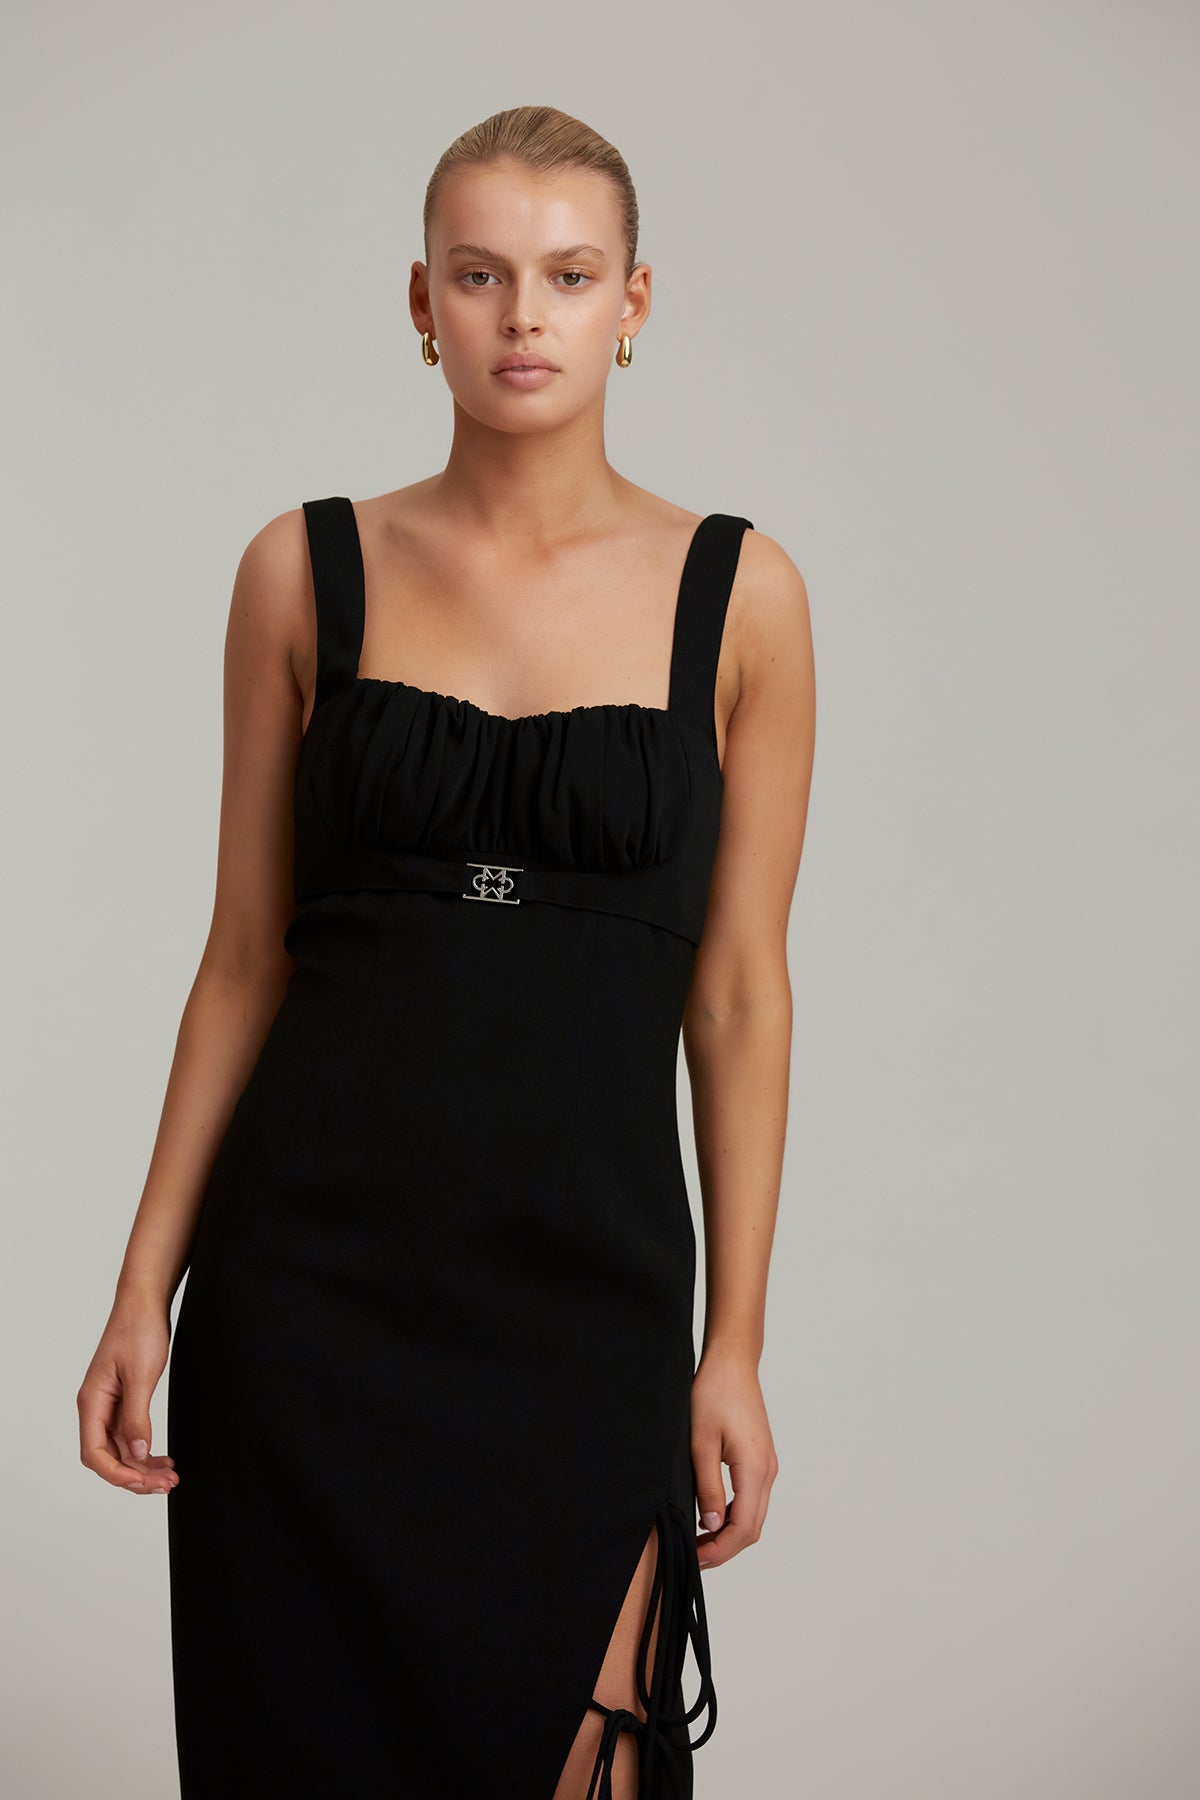 C/MEO Collective - Validate Dress - Black